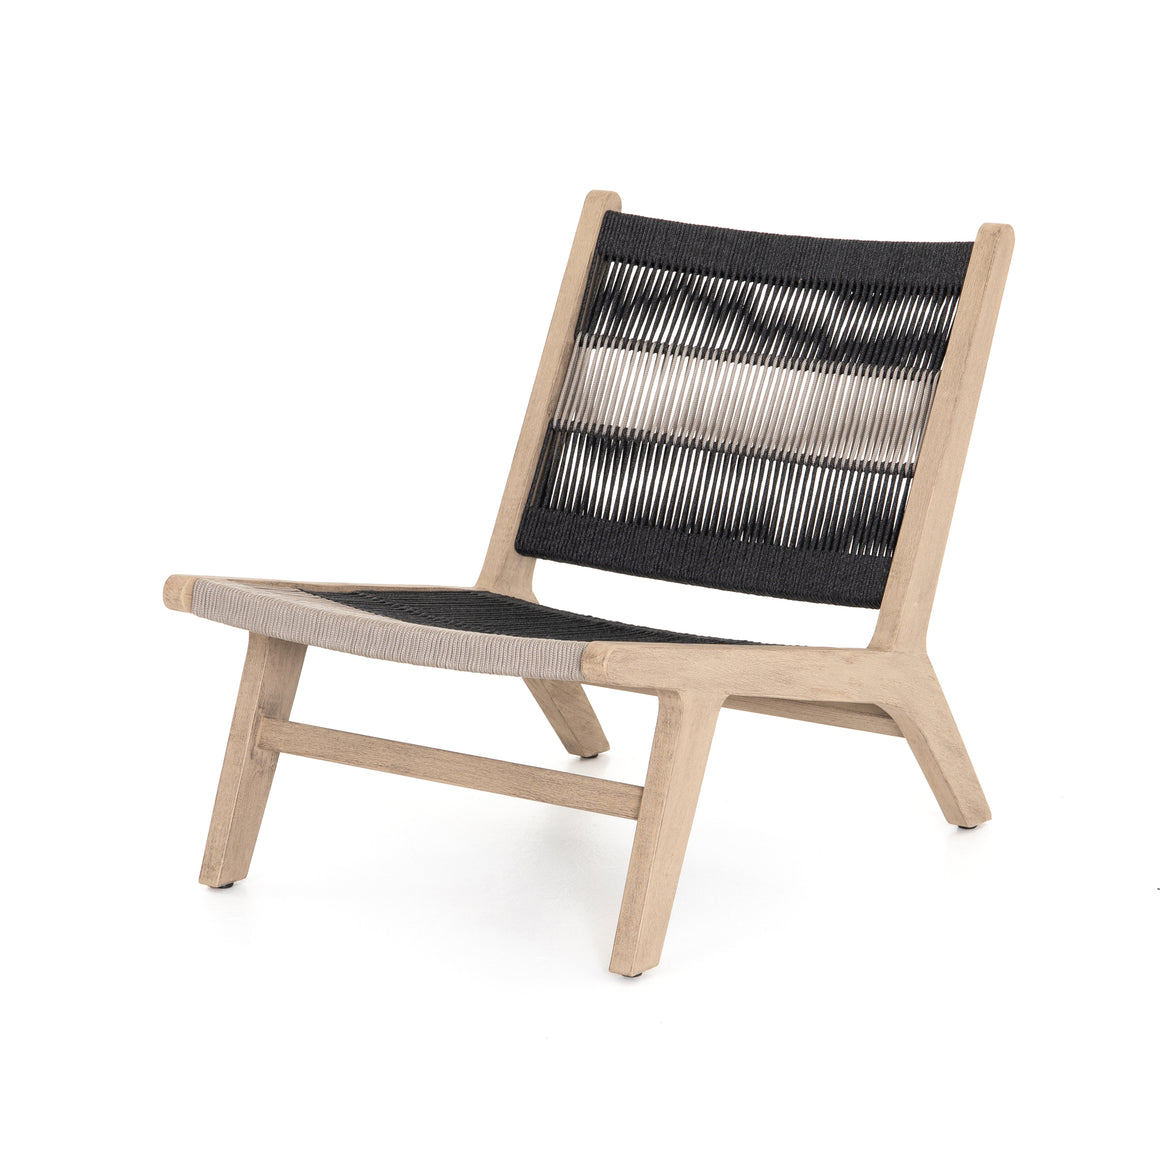 Julian Outdoor Teak Lounge Chair - Washed Brown